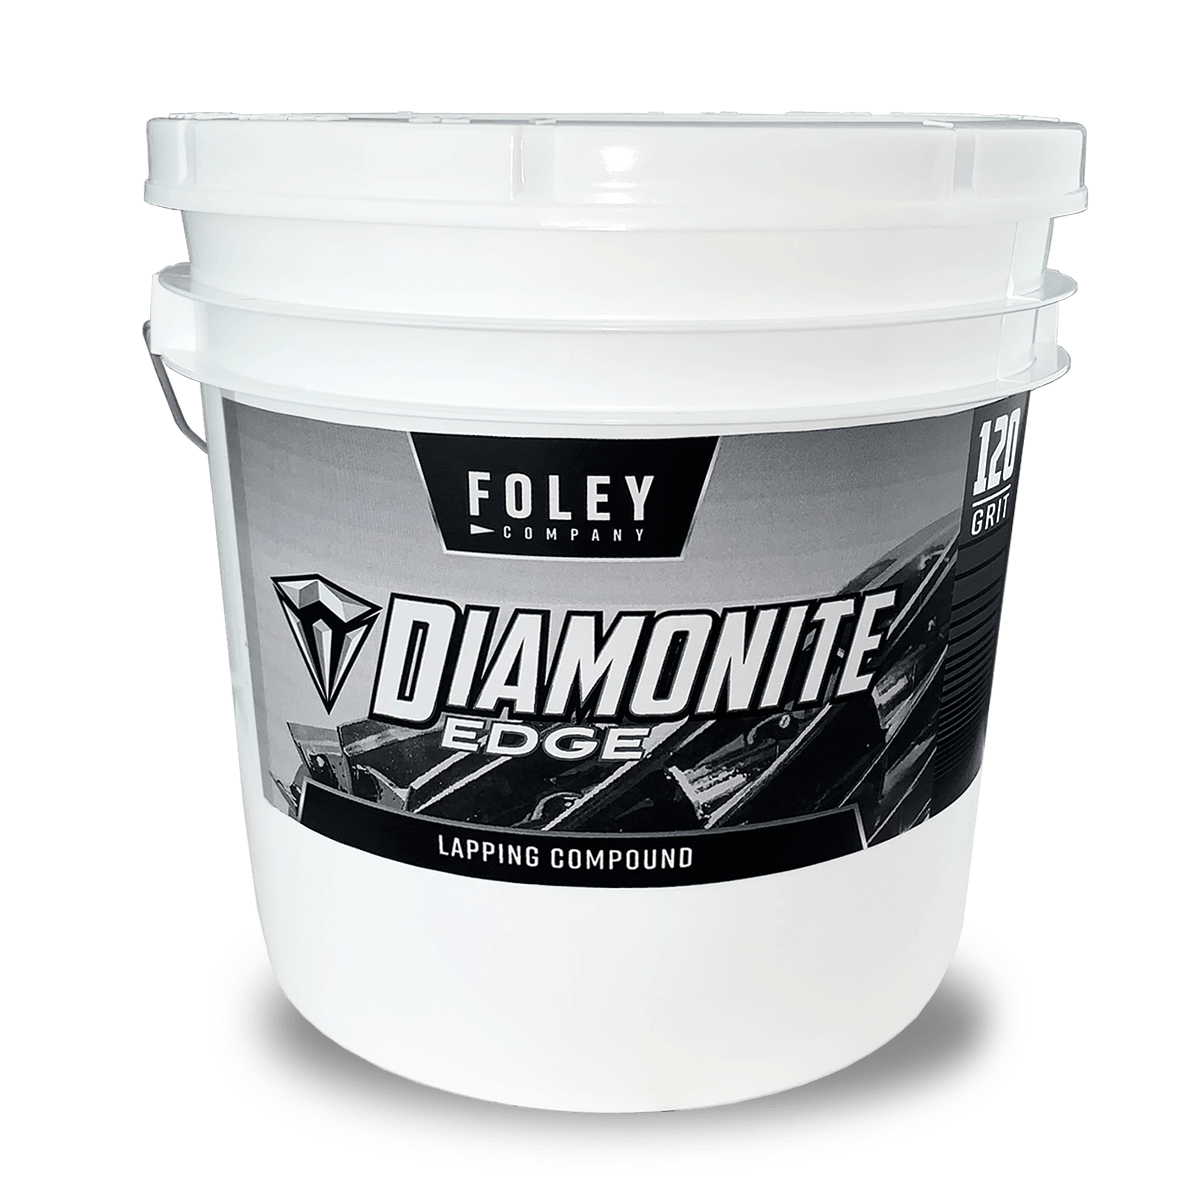 Foley Diamonite Edge Lapping Compound 120 Grit